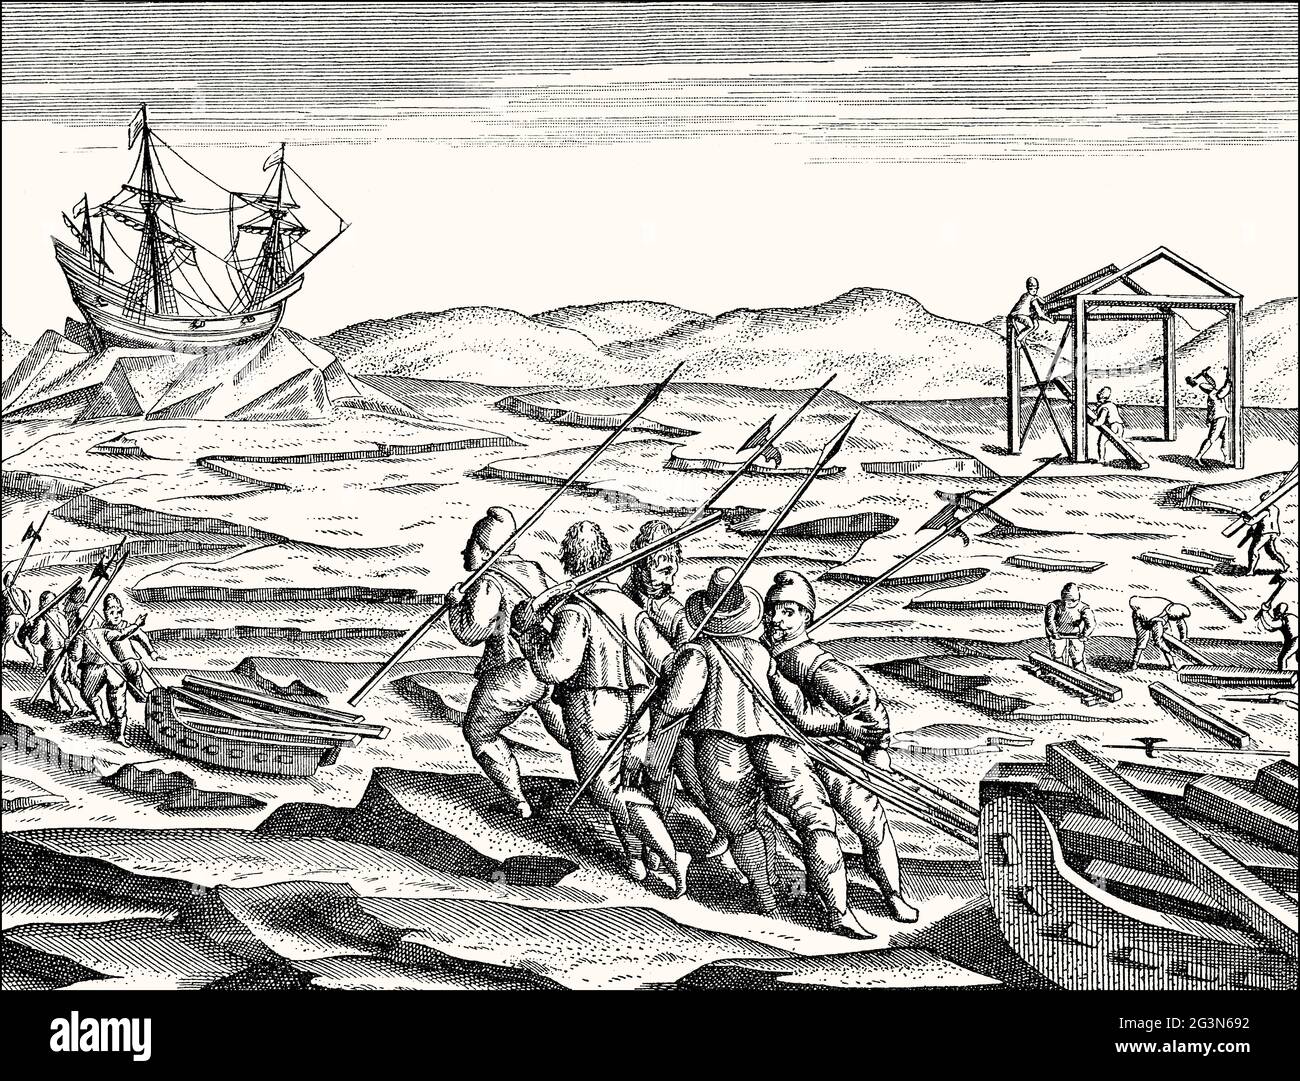 Expedition to the Arctic region by Willem Barentsz, c. 1550 – 1597, Dutch Arctic explorer Stock Photo